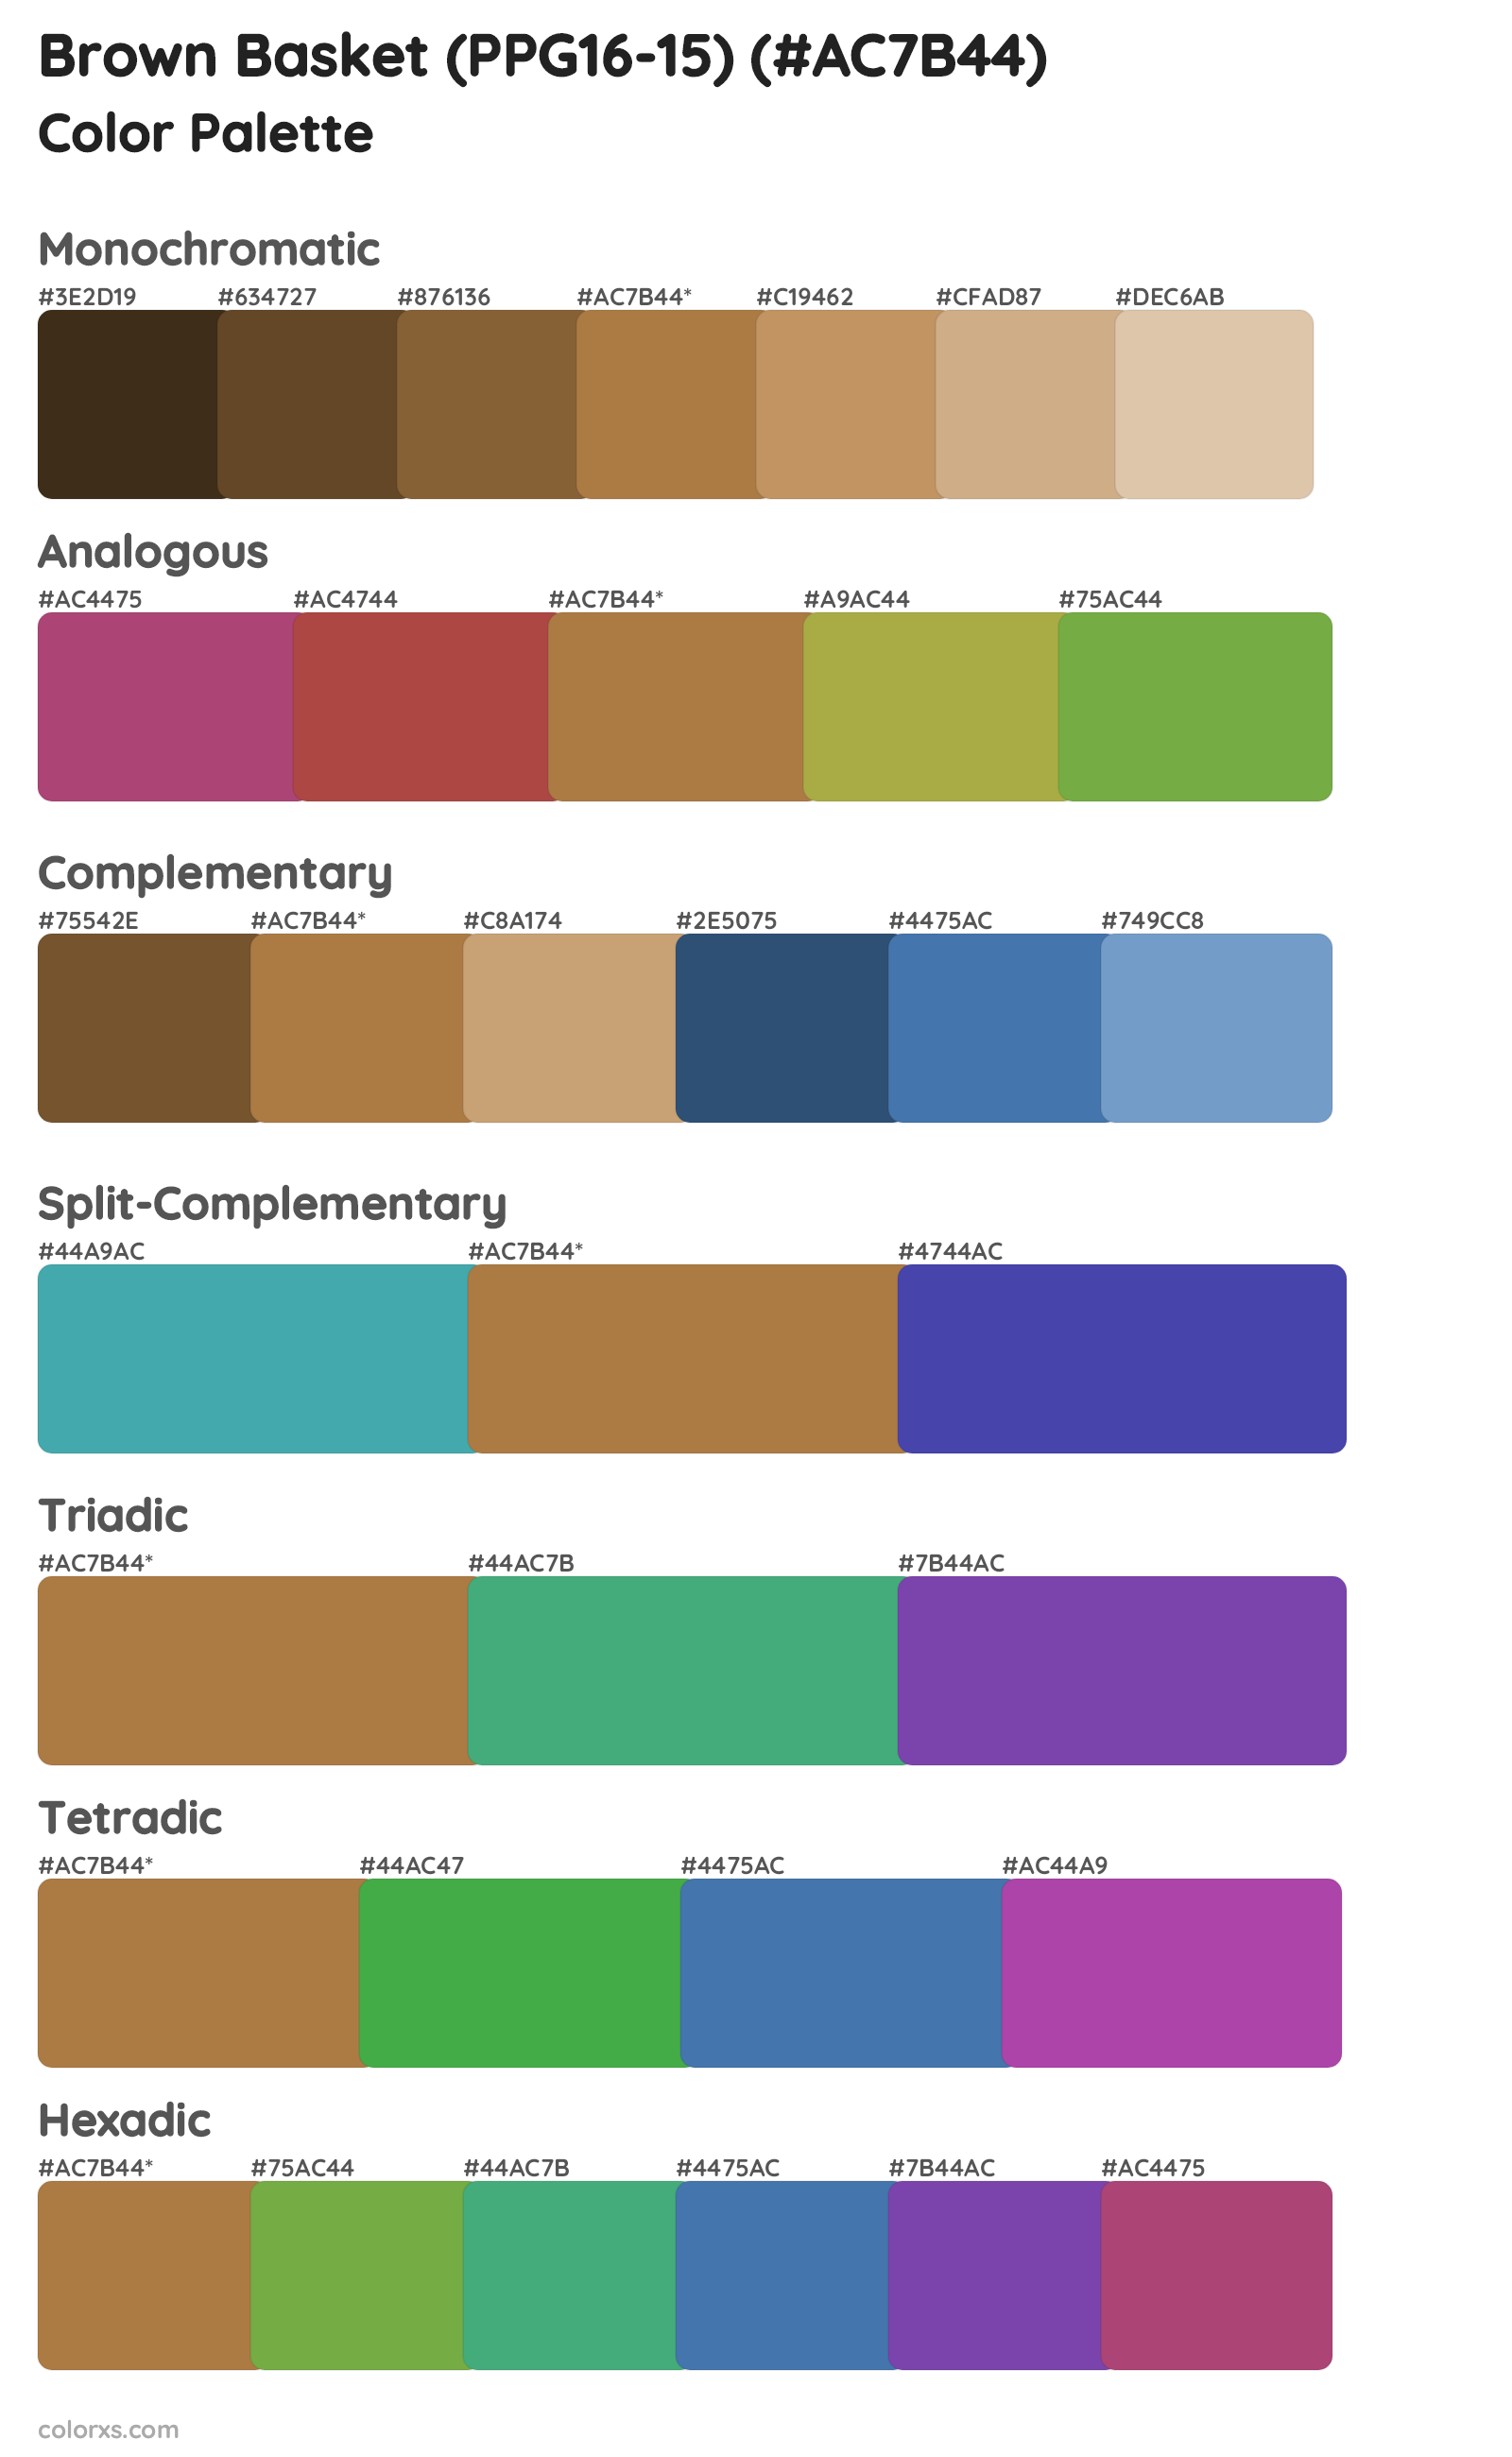 Brown Basket (PPG16-15) Color Scheme Palettes